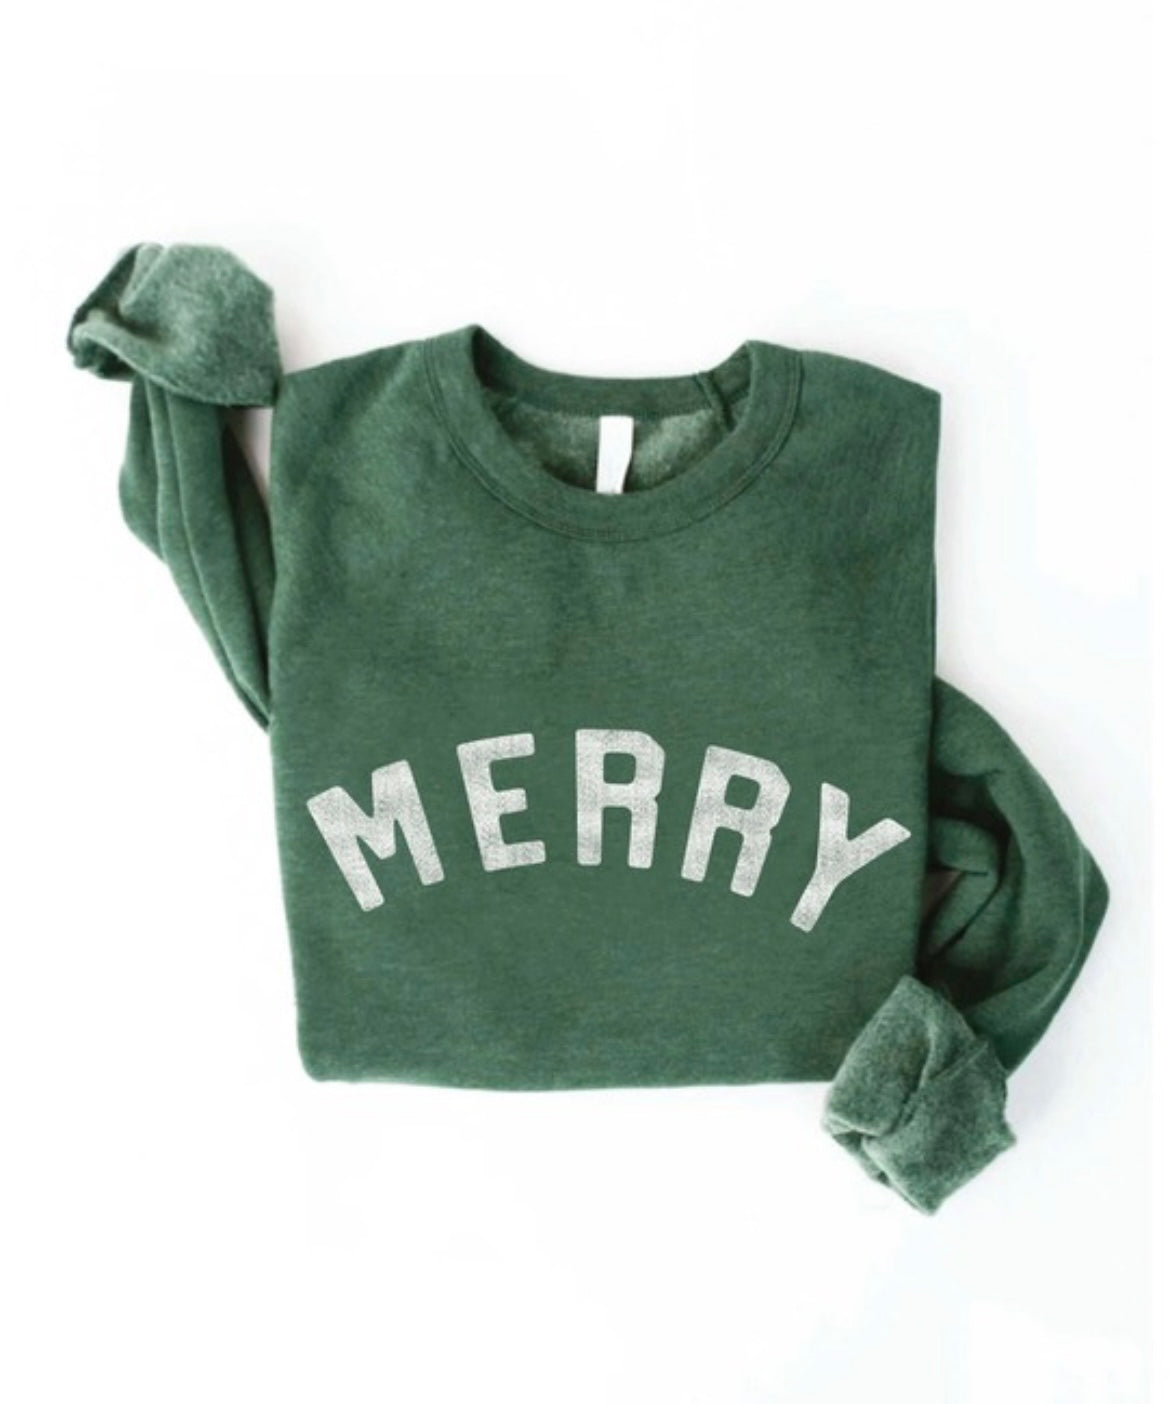 Soft and Cozy Merry Sweatshirt